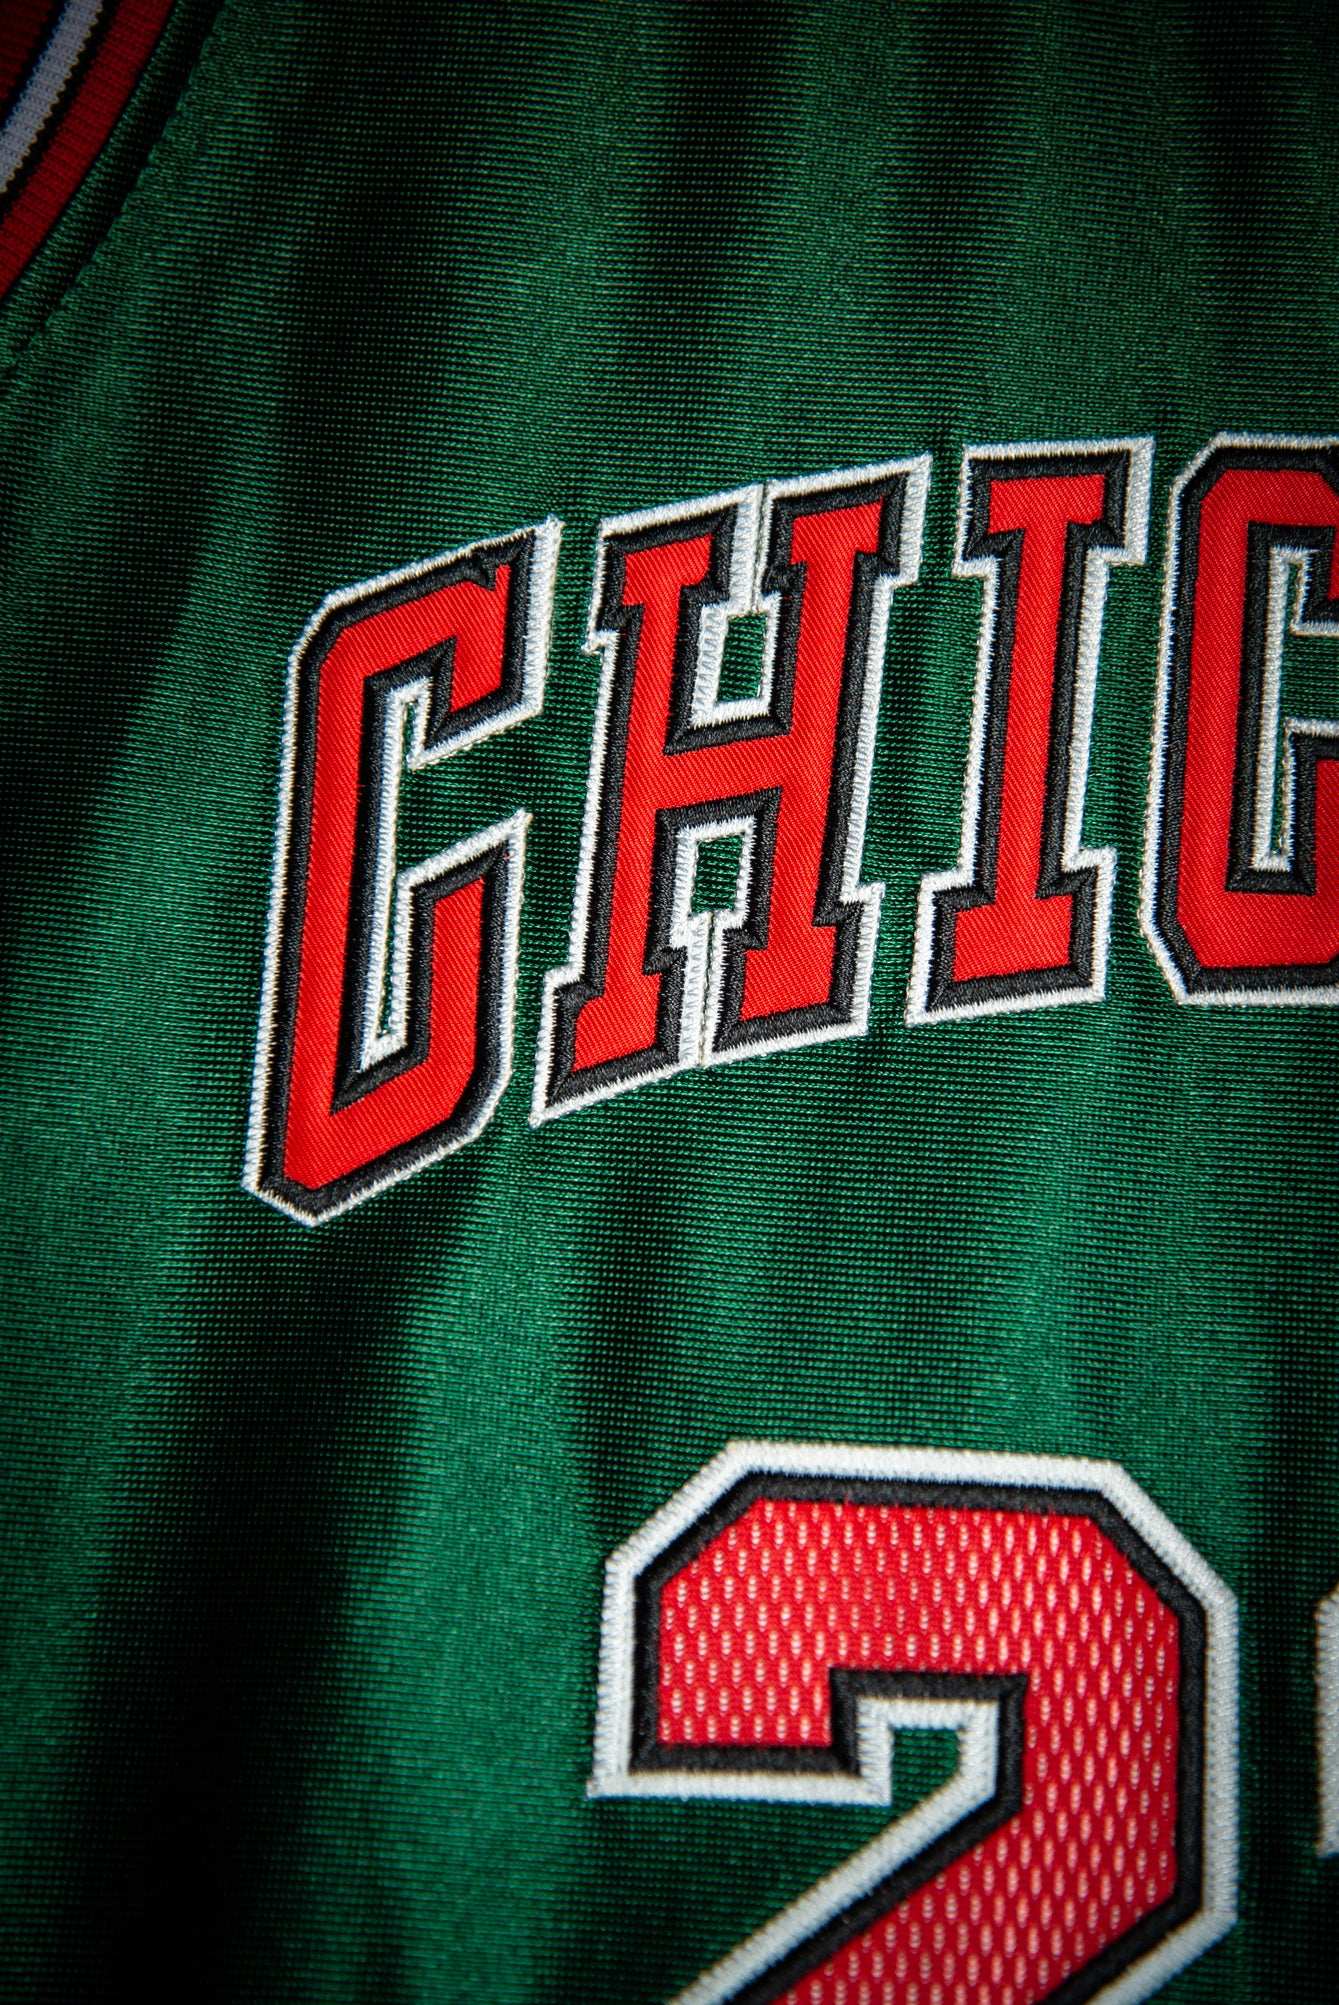 Michael Jordan Chicago Bulls Green Throwback Hardwood Classics 97-98 Swingman Jersey